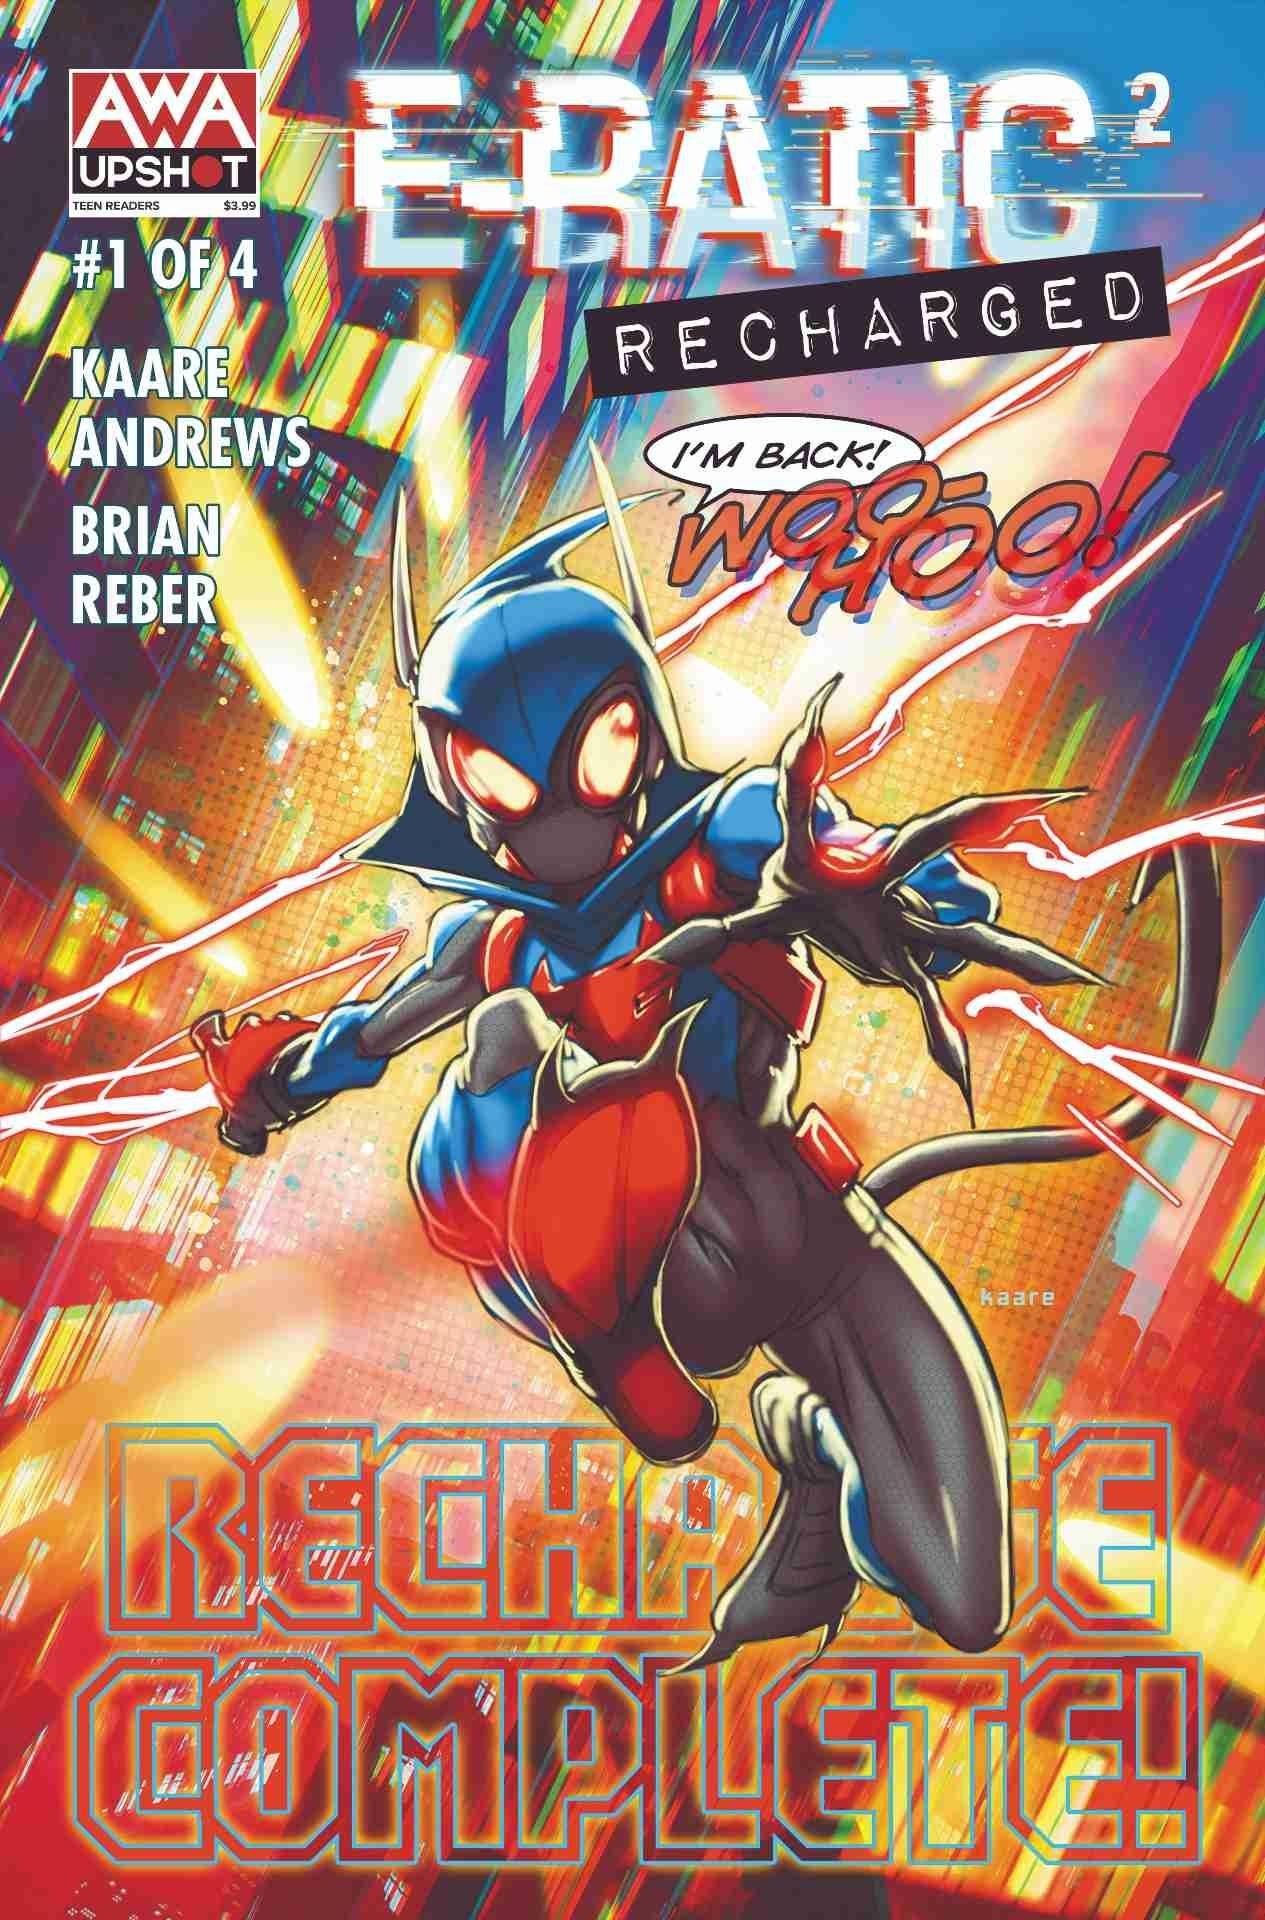 E-Ratic 2 Recharged AWA Comic Cover 1